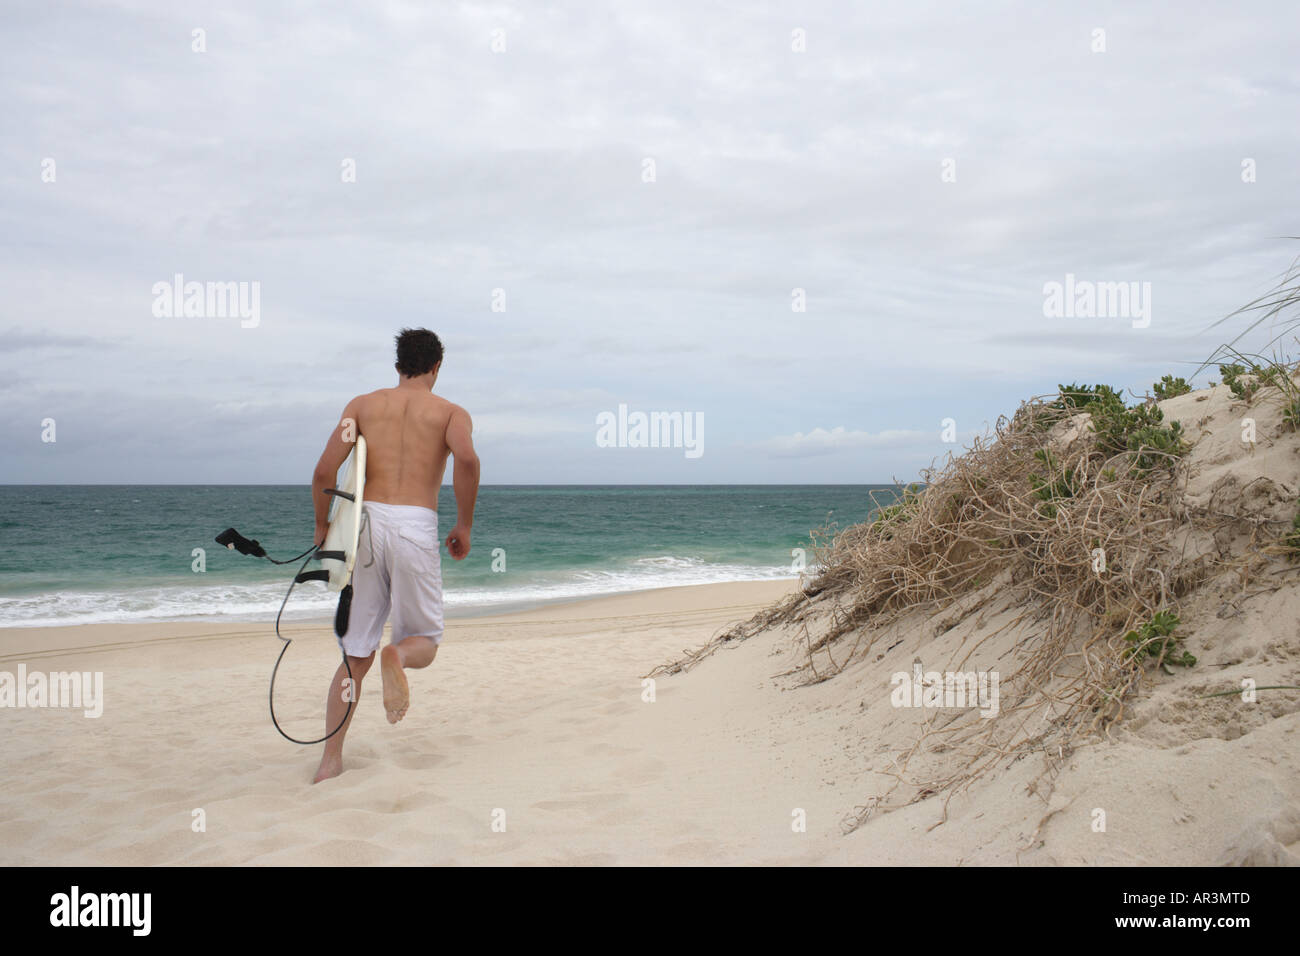 Junger Mann mit Surfbrett Strand entlang laufen Stockfoto